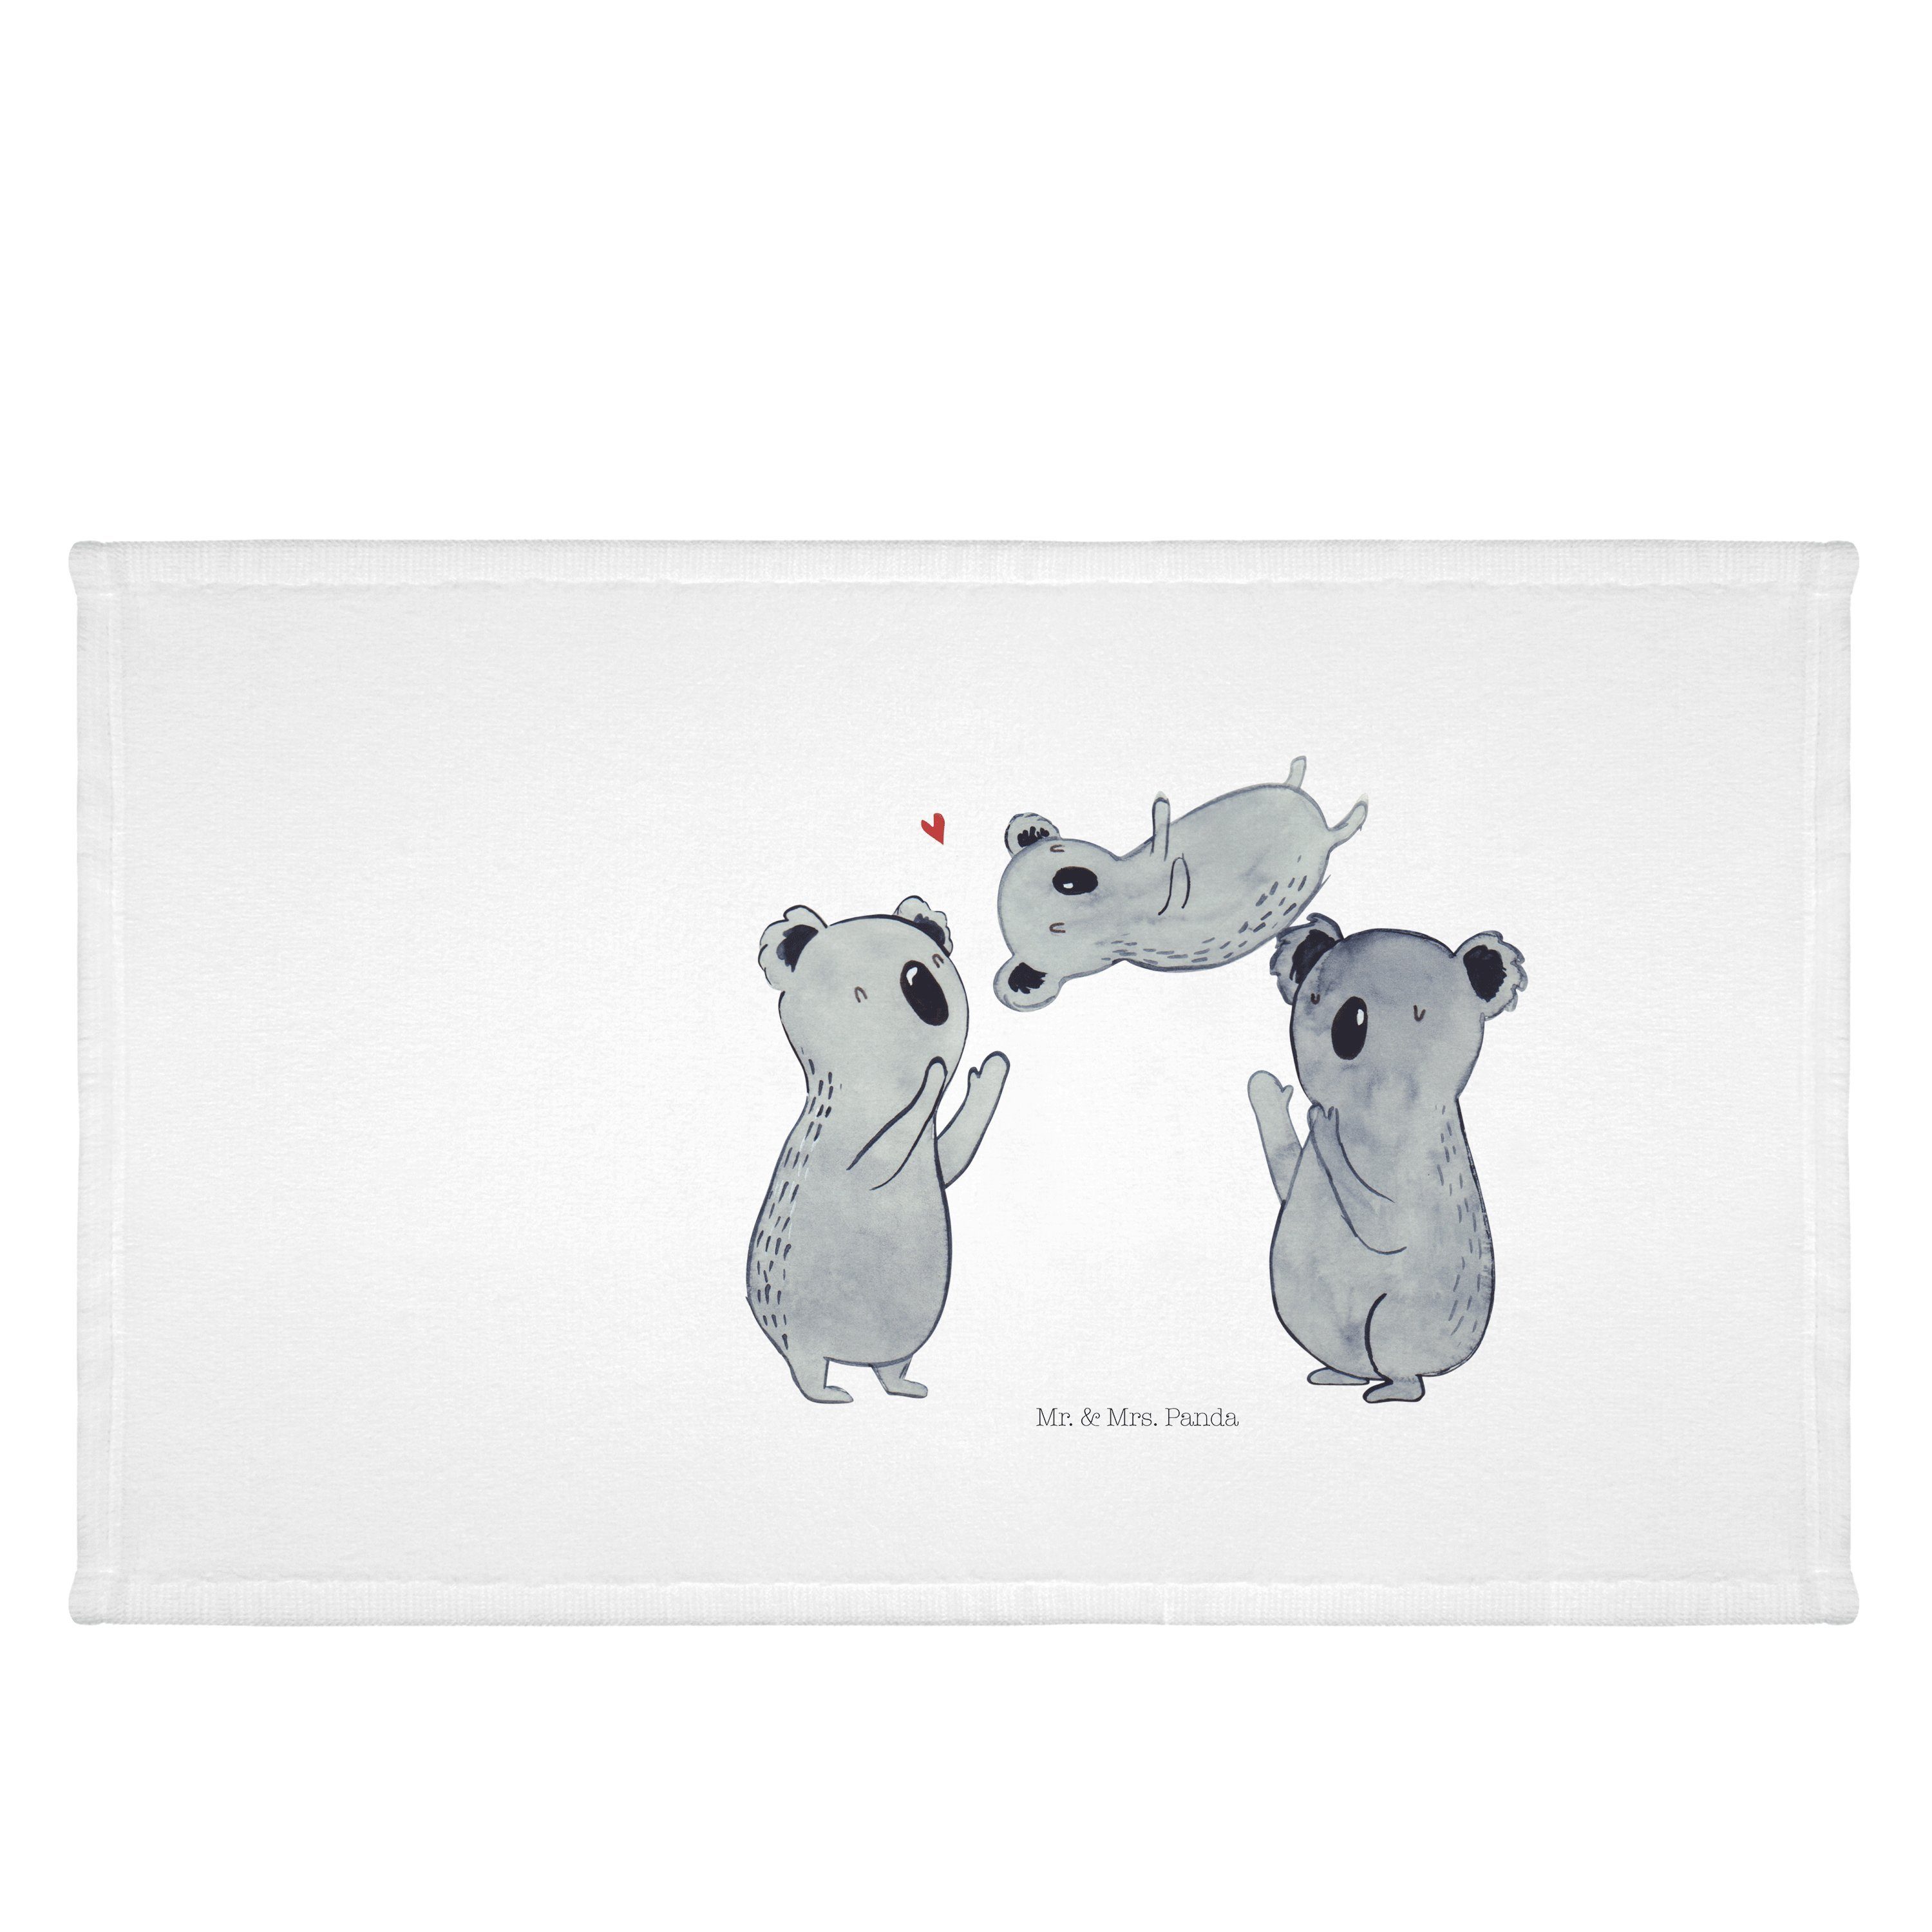 Mr. & Mrs. Panda Handtuch Koala Feiern Sich - Weiß - Geschenk, Baby, Handtuch, Badezimmer, Bade, (1-St)